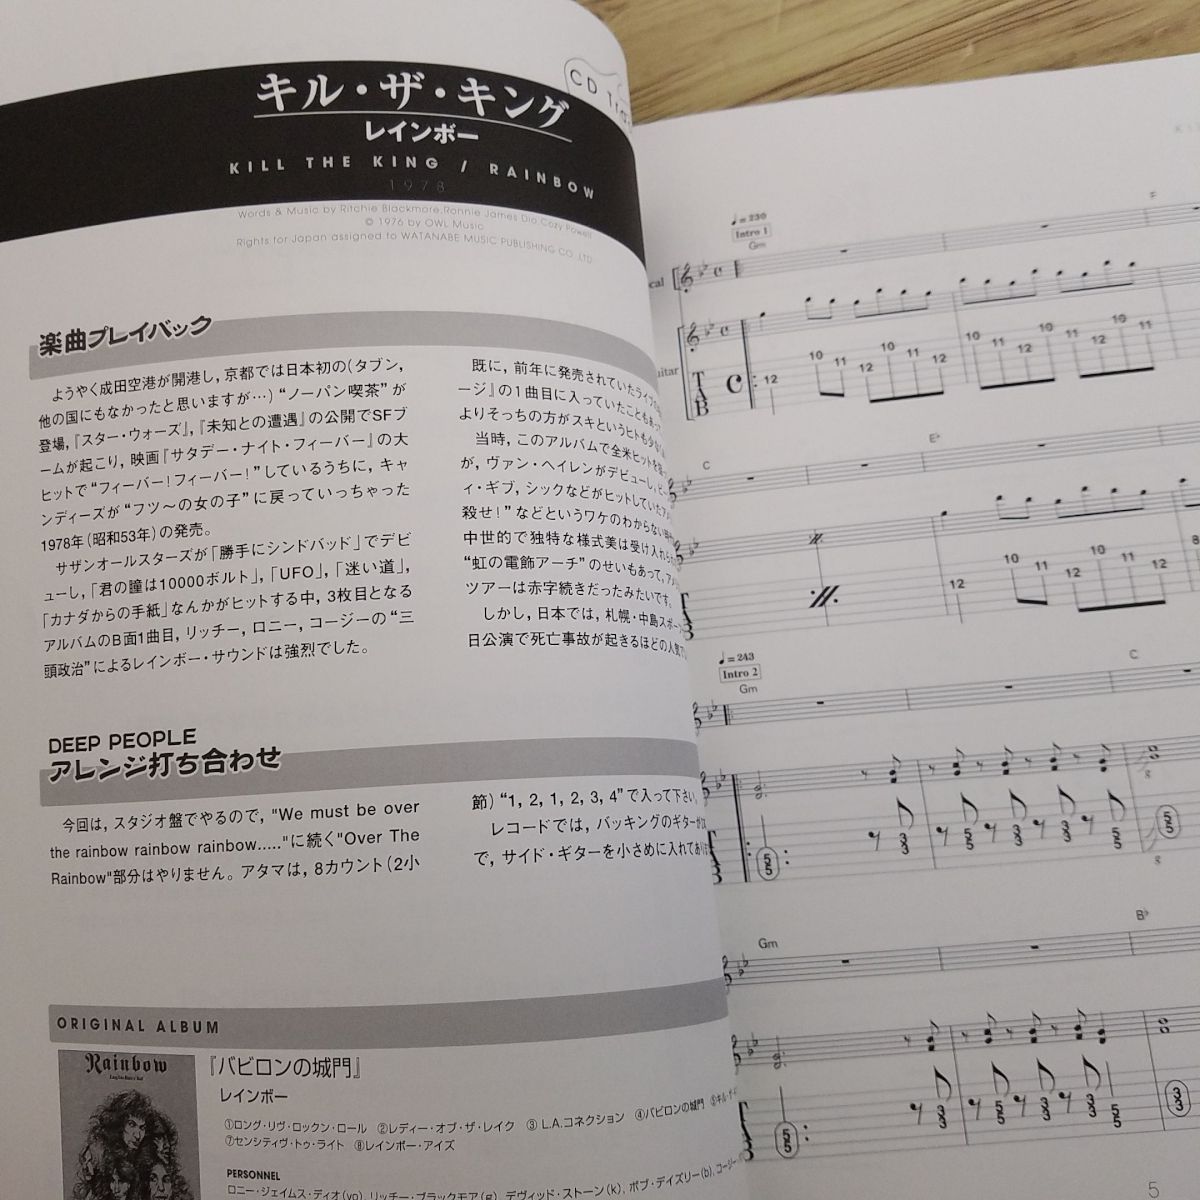  musical score [ hard * lock gi Takara! : 70*S HARD ROCK GITAKARA!( karaoke CD attaching )] 8 bending western-style music lock guitar score 70 period hard rock 